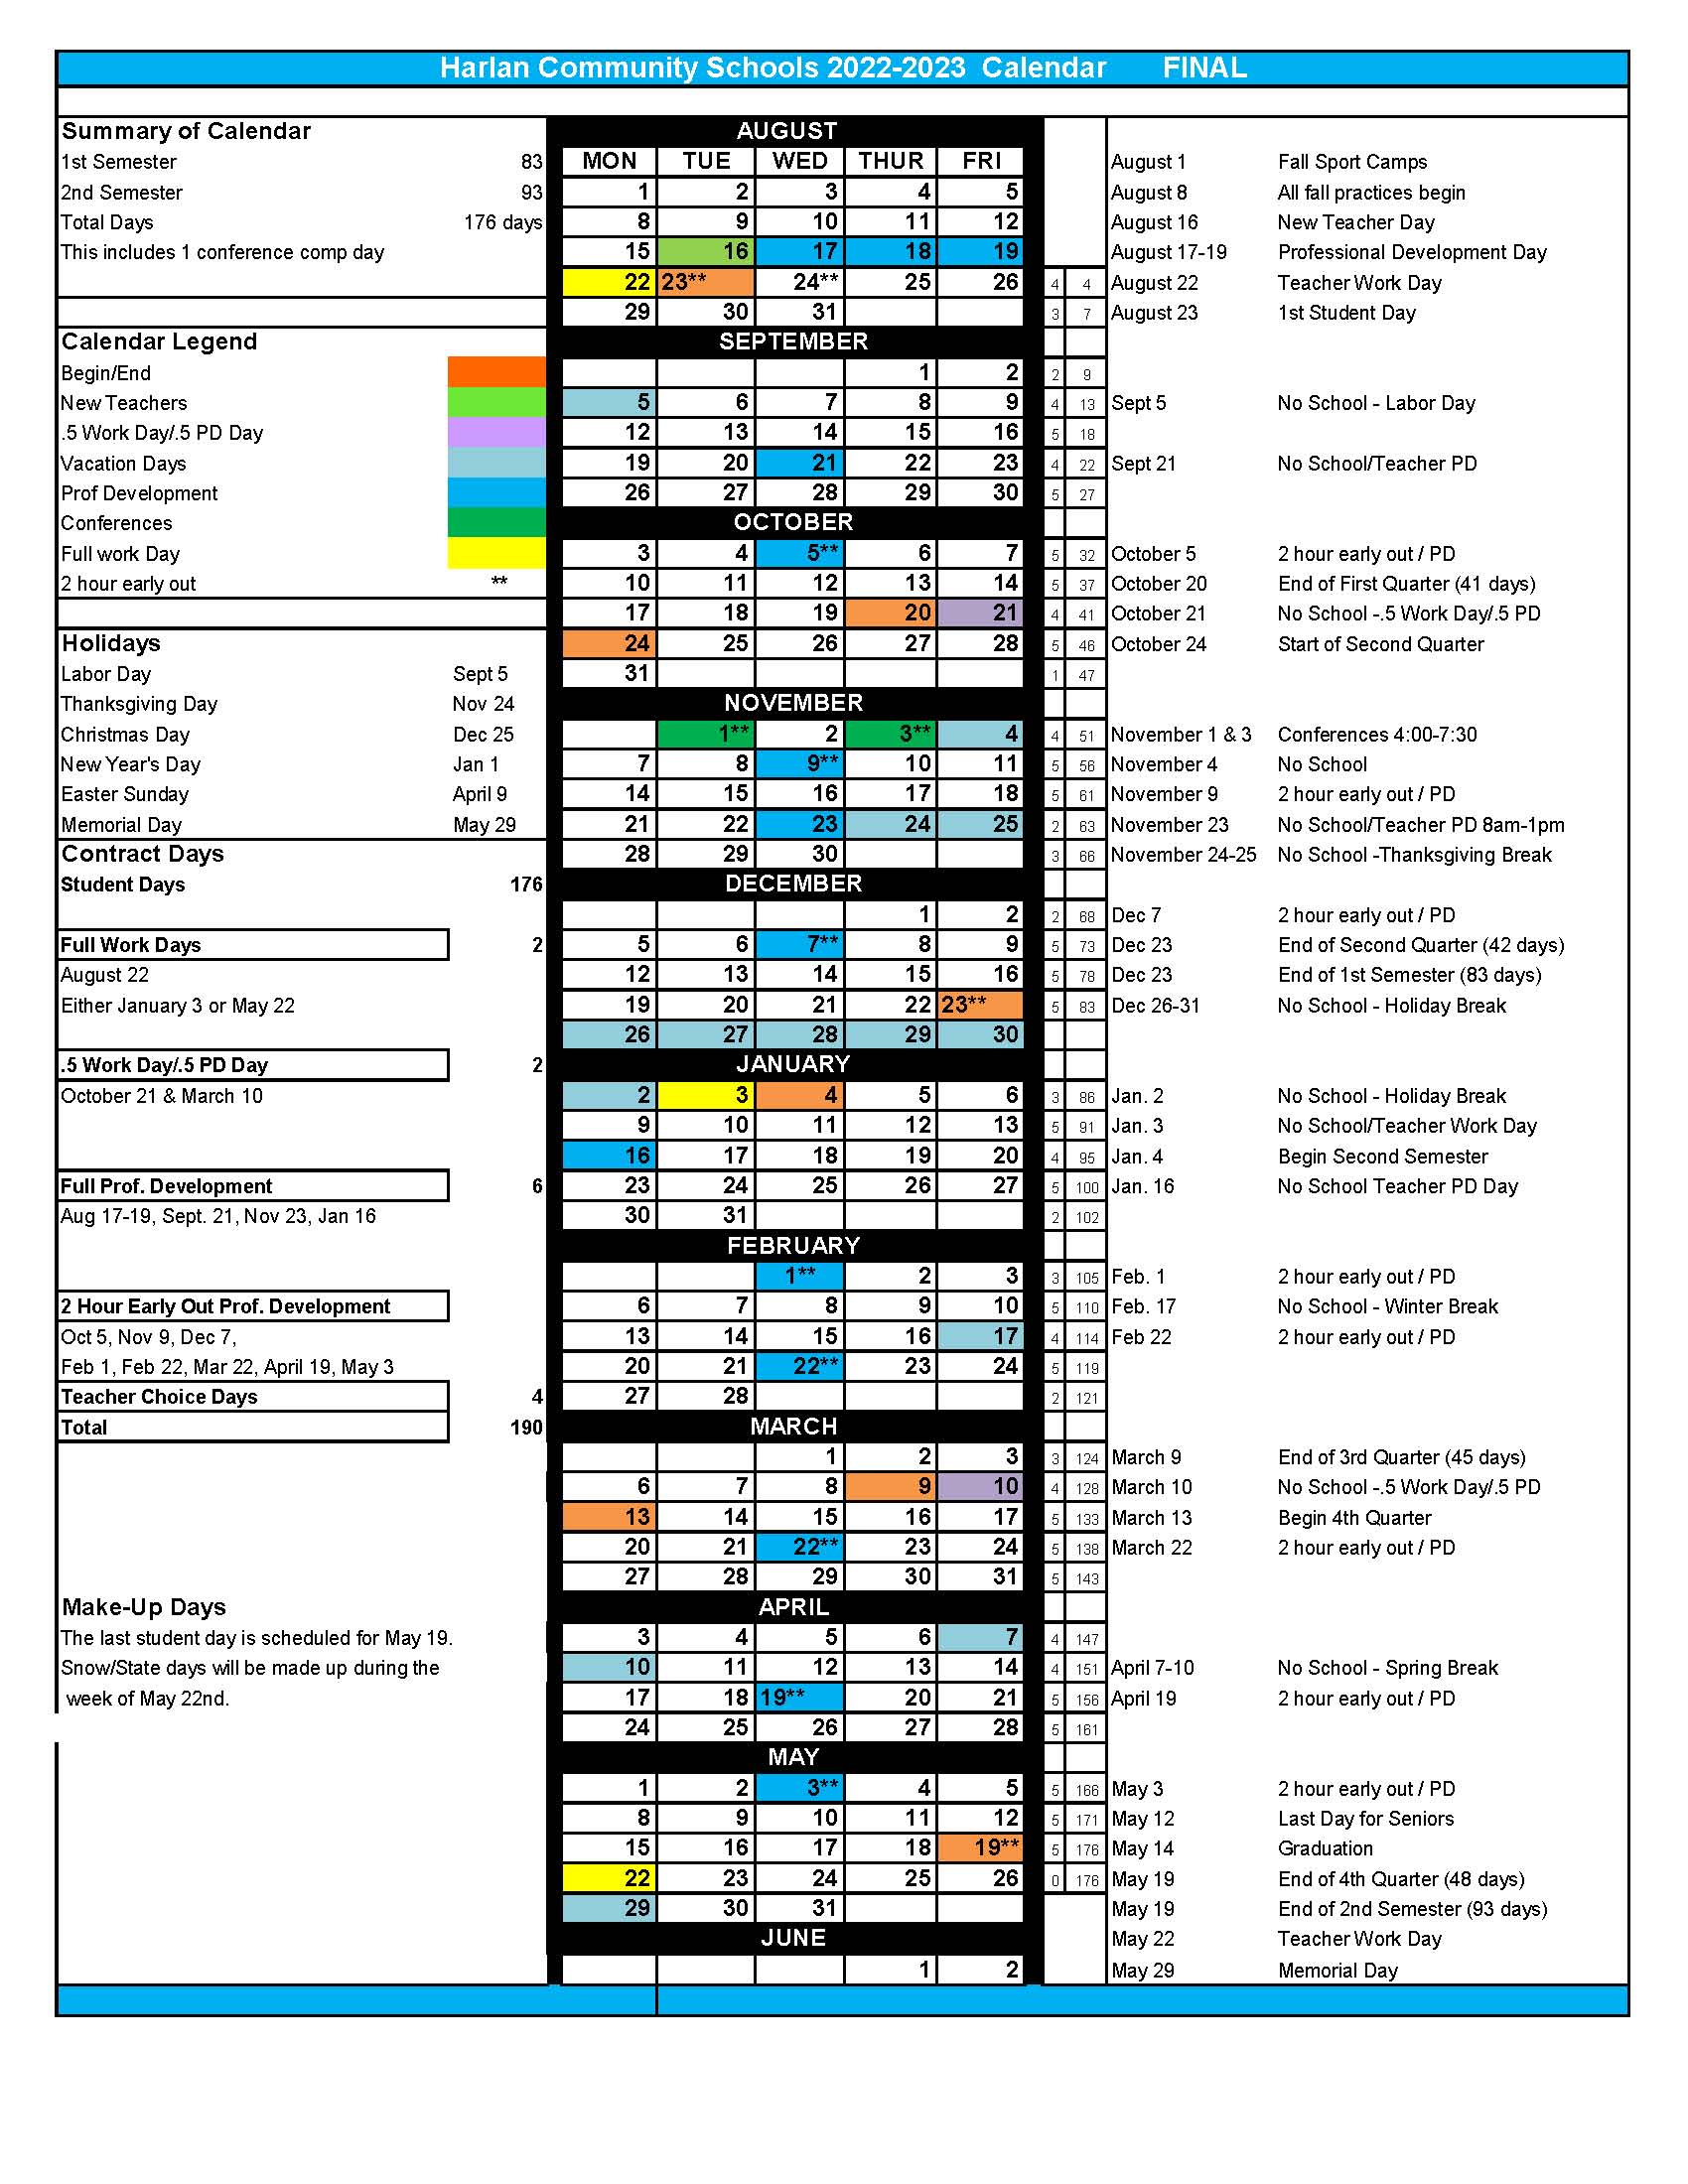 Harlan Community School District Calendar 2024-2025